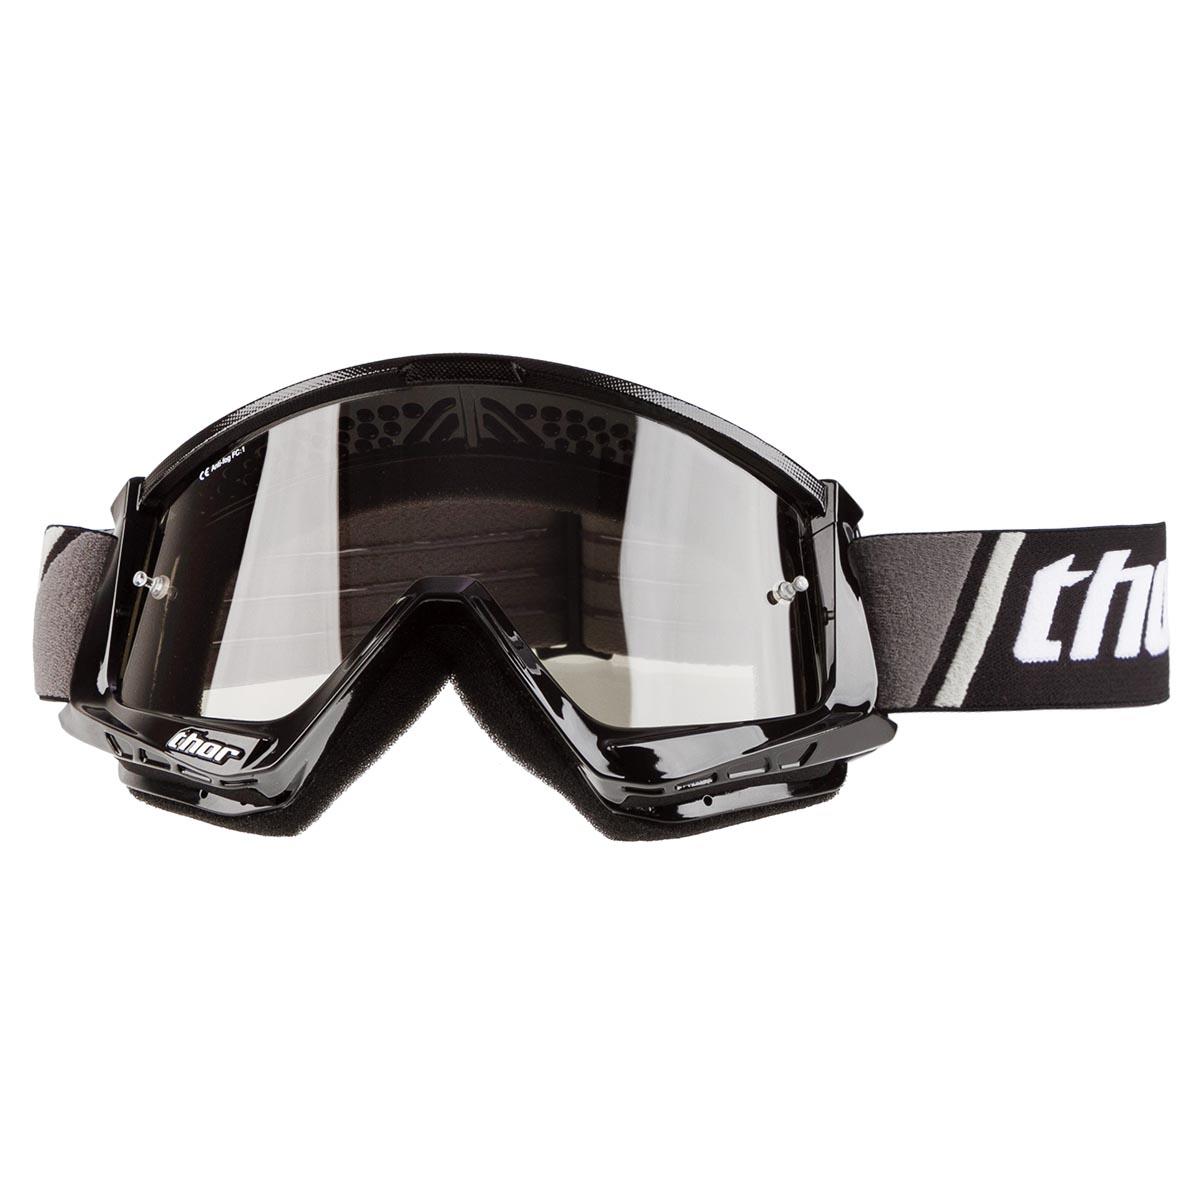 Thor MX Goggle Combat - Sand Black/White - Lens Brown Anti-Fog